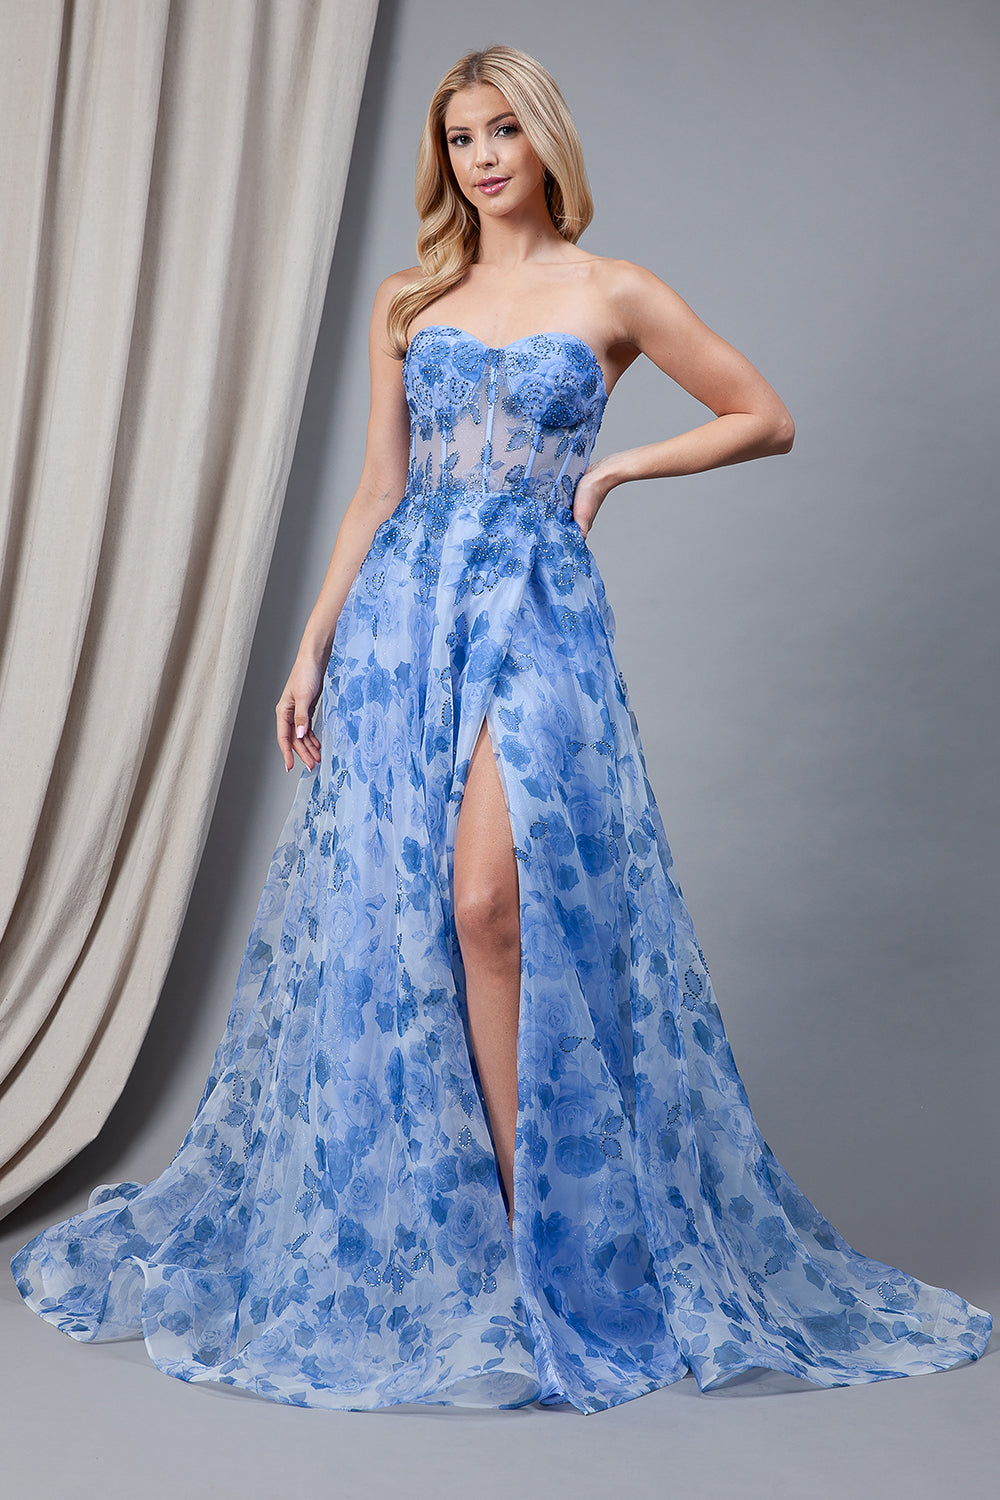 Floral Strapless Side Slit Embellished Jewel Long Prom Dress AC2106 Elsy Style Prom Dress